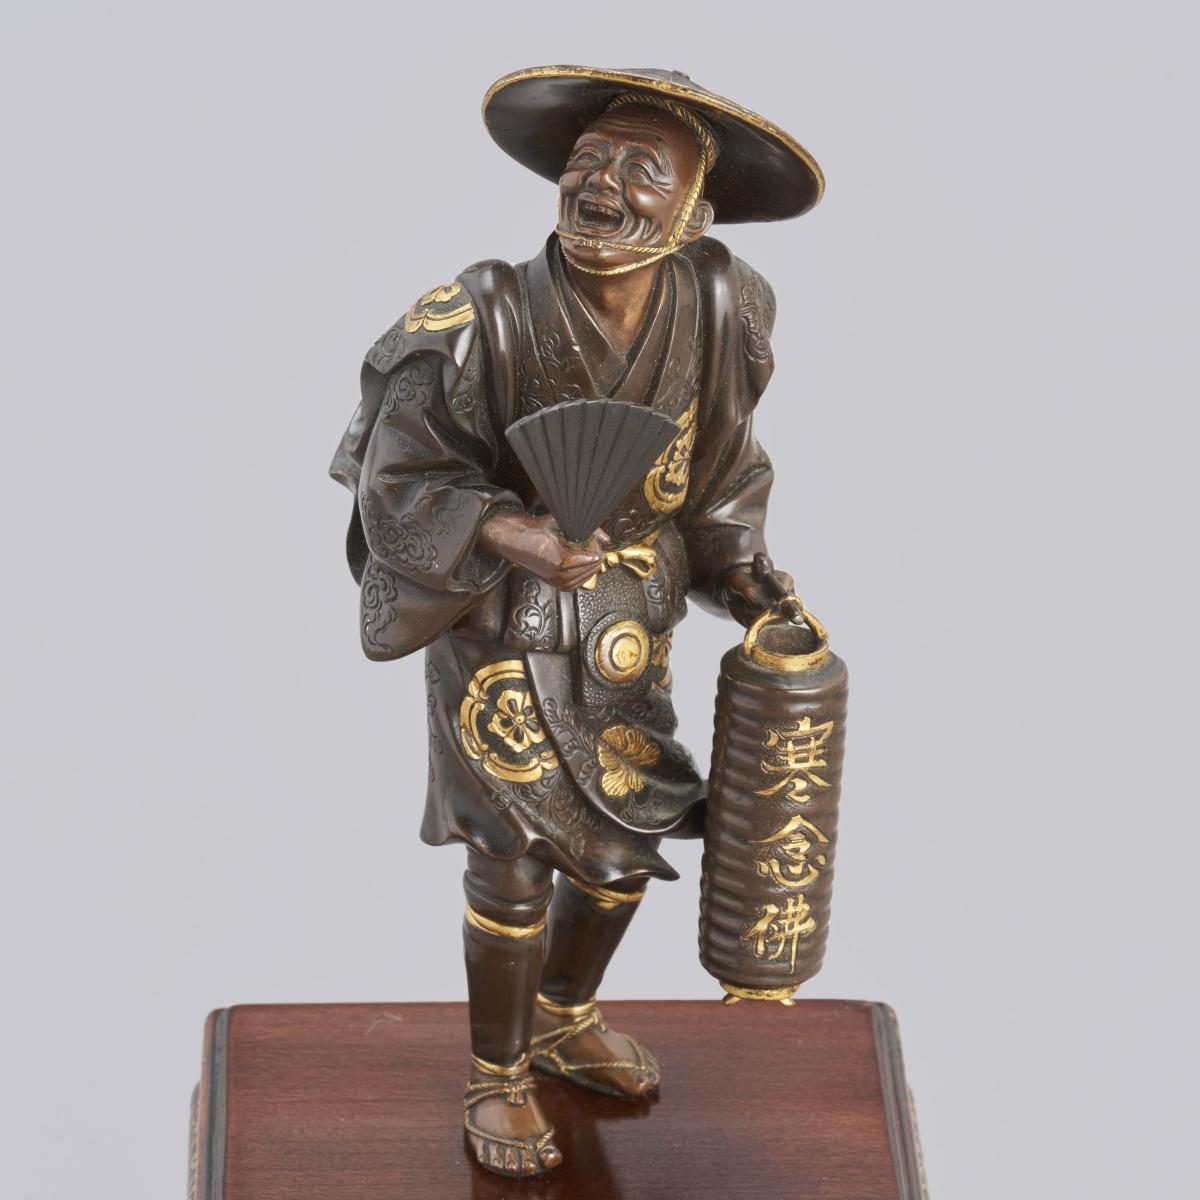 Japanese bronze night watchman signed Miyao, Meiji Period